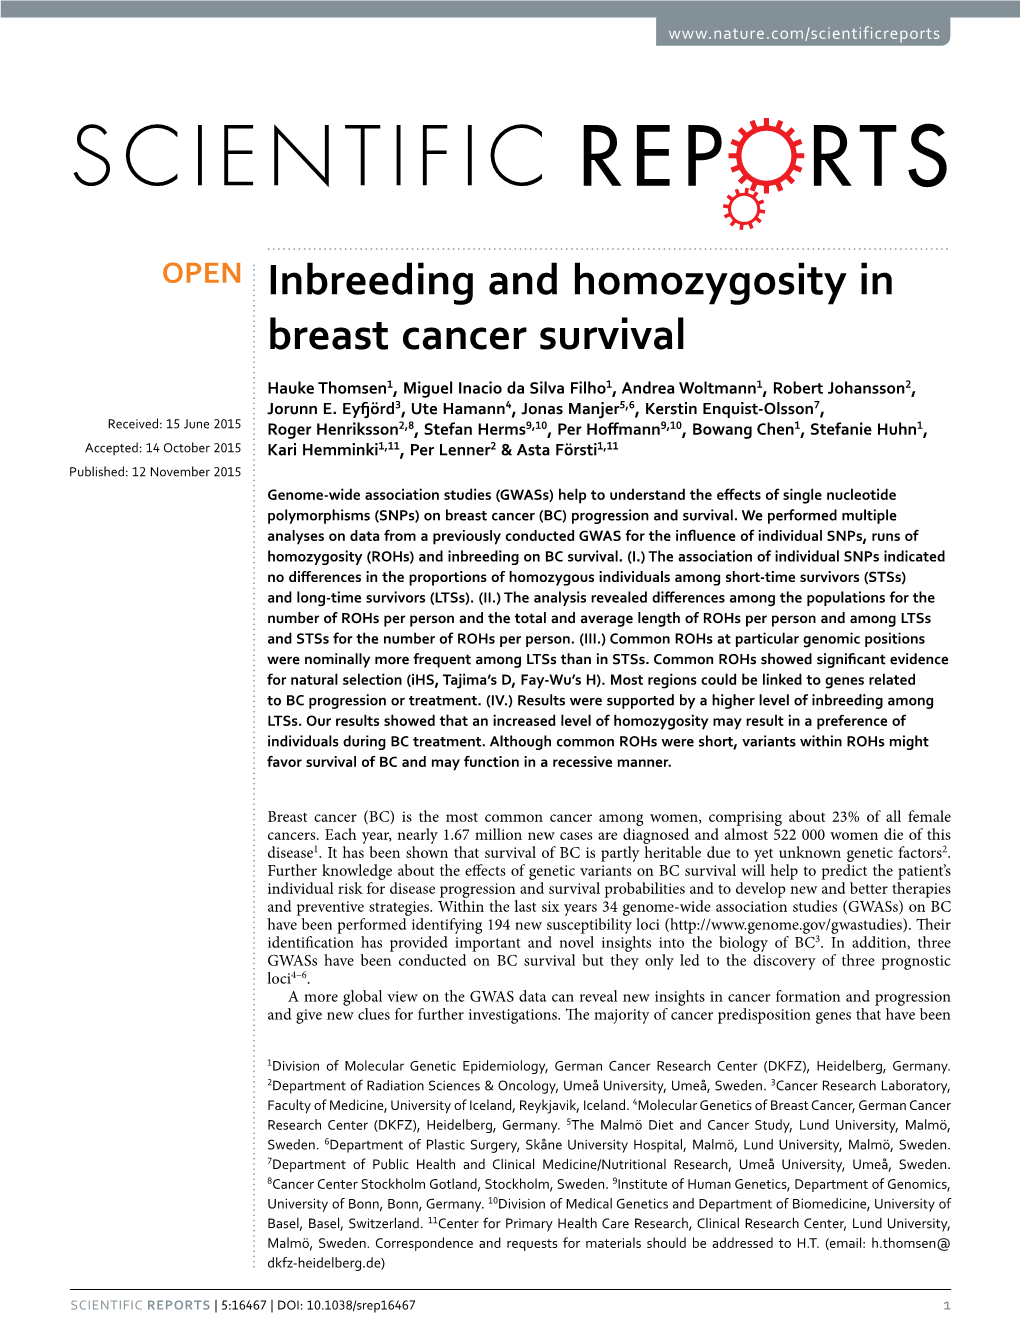 Inbreeding and Homozygosity in Breast Cancer Survival